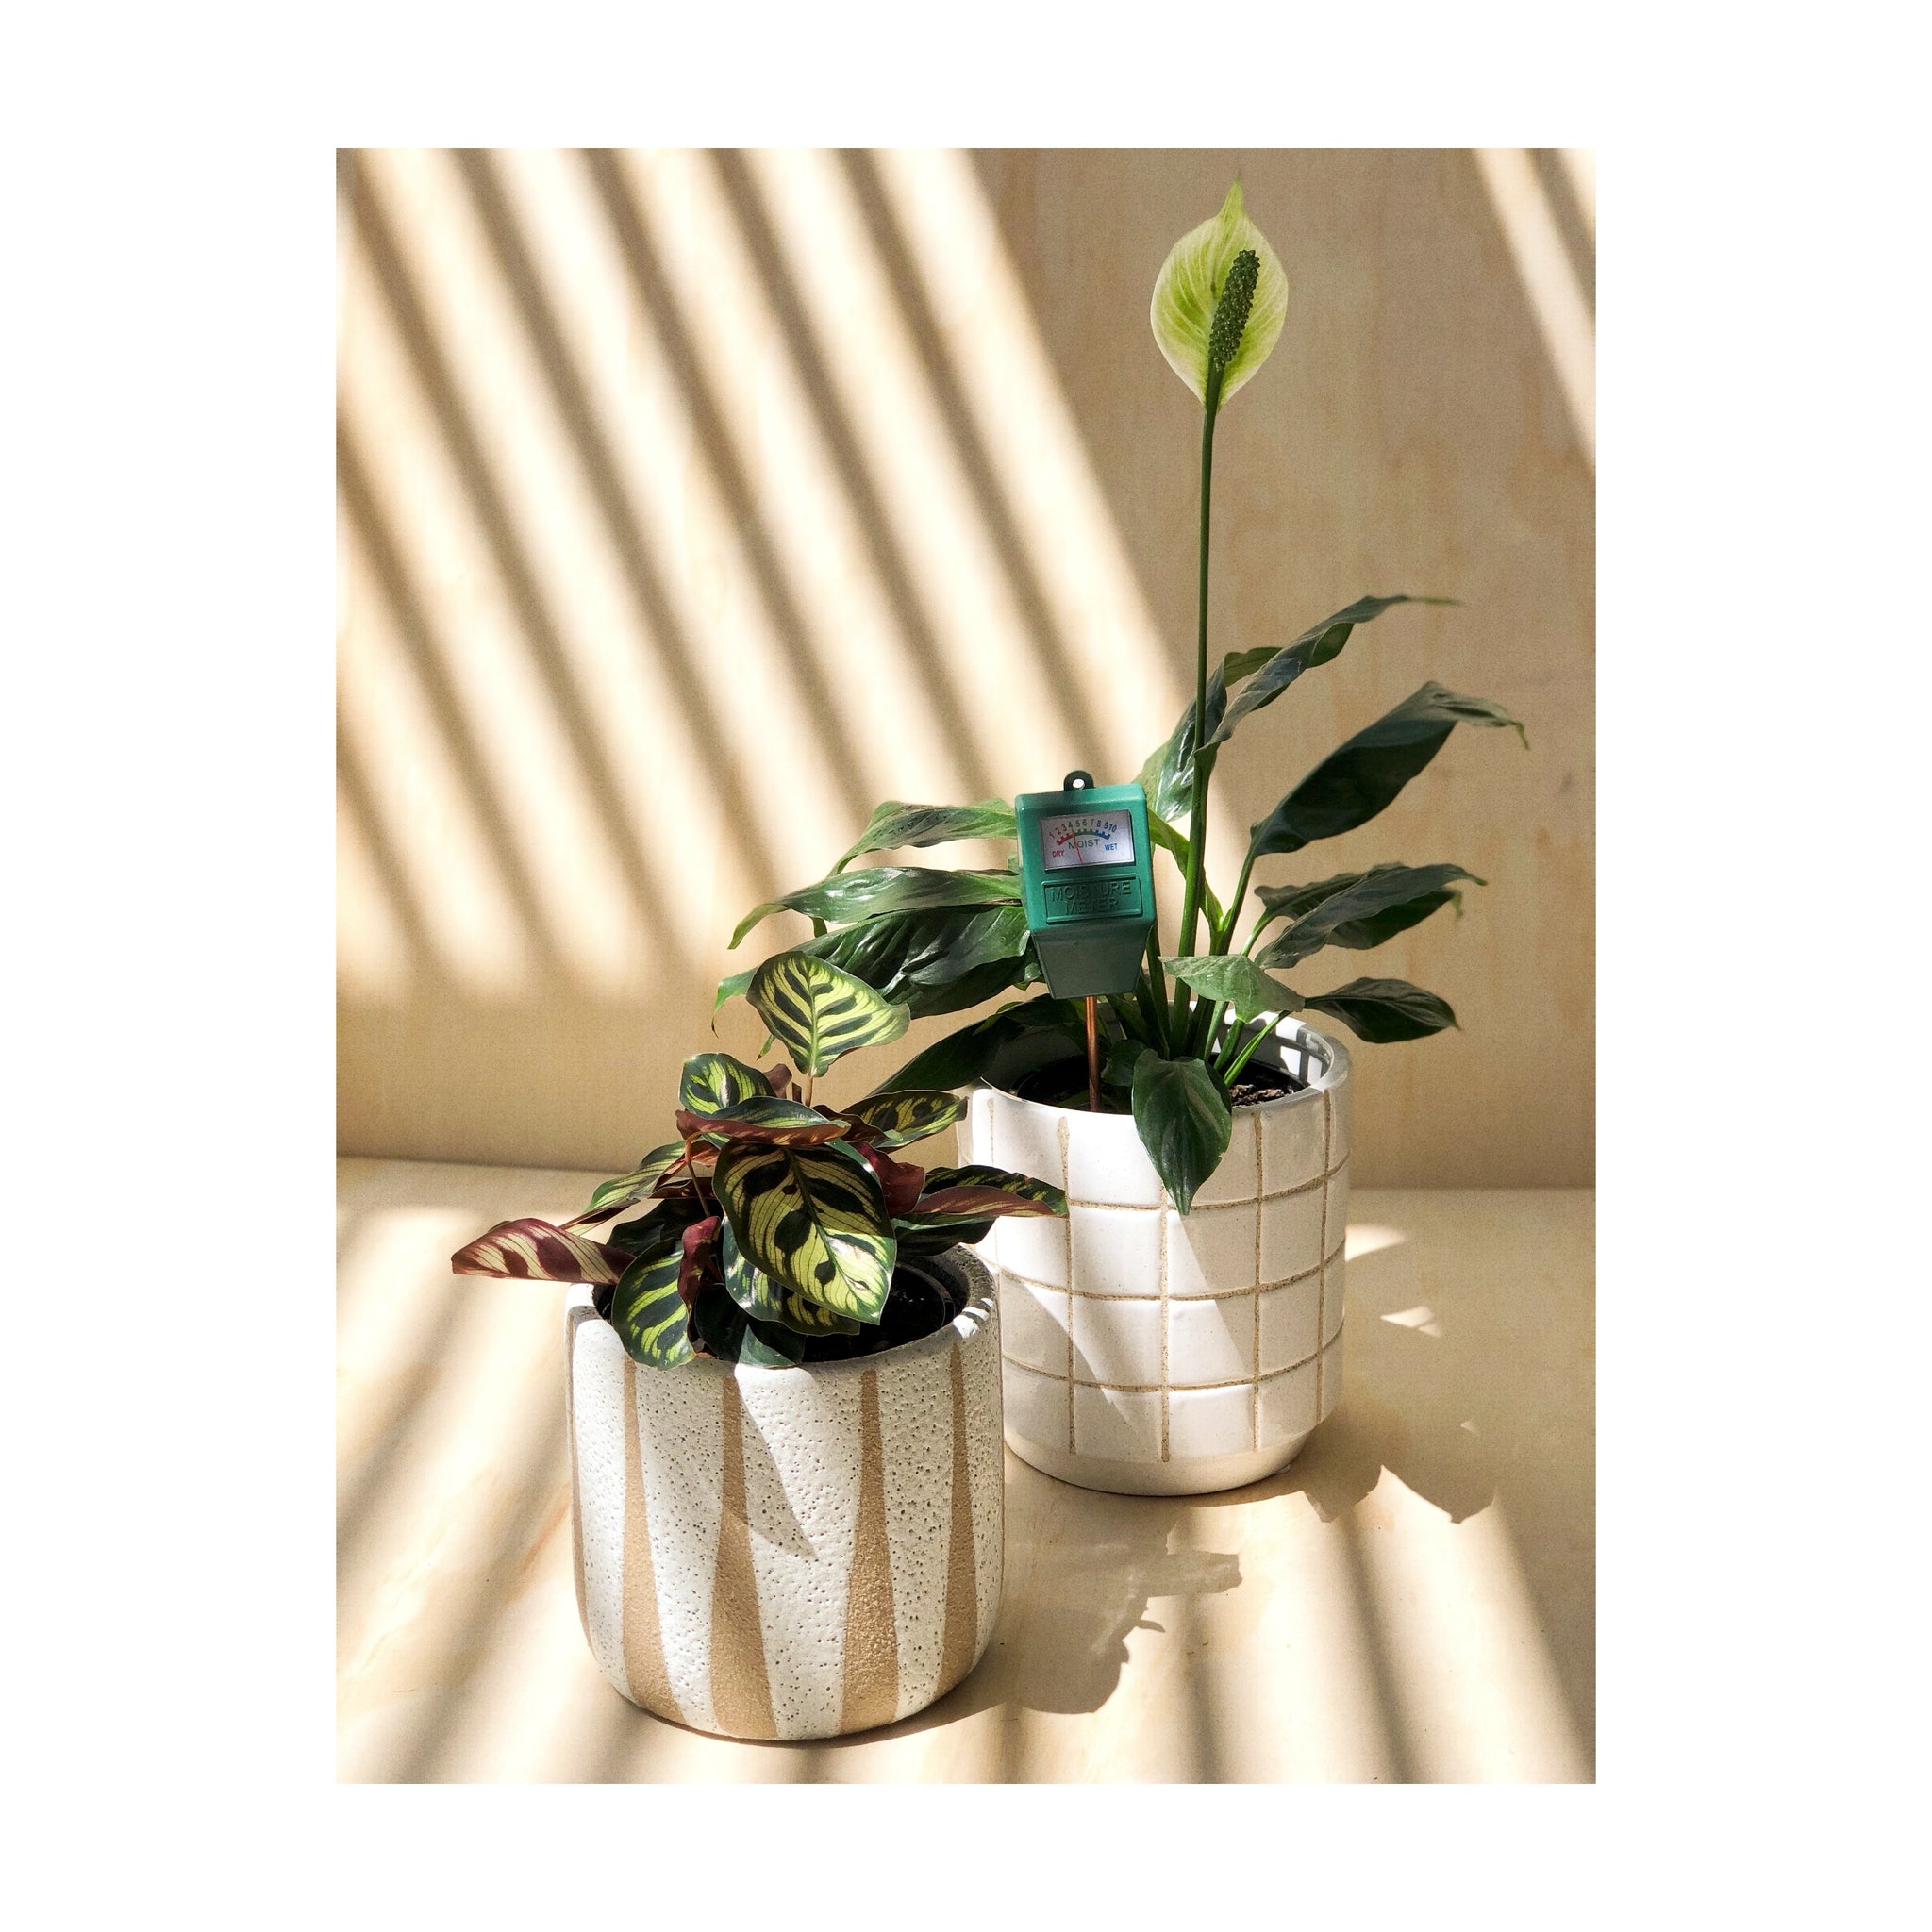 Turia Ceramic Plant Pot + Peacock Plant + Plexus Ceramic Plant Pot + Peace Lily (Spathiphyllum)